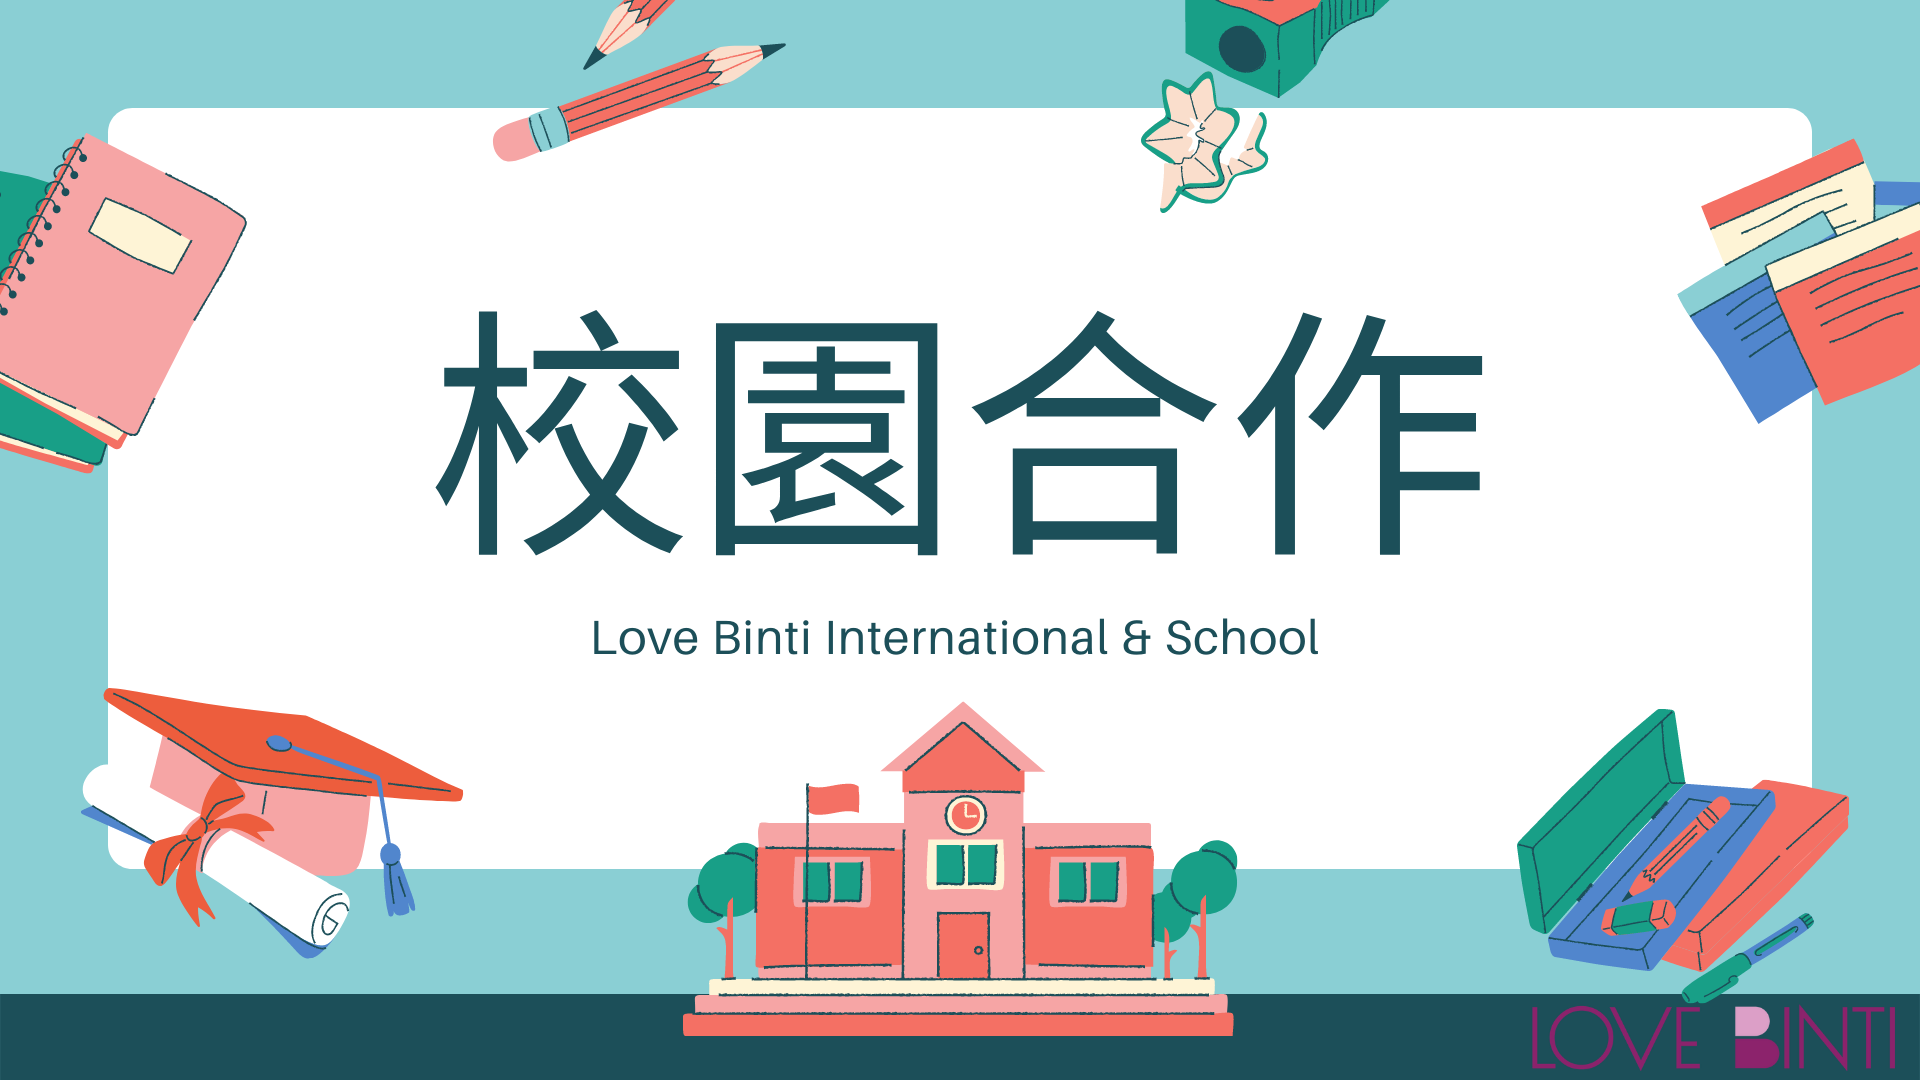 http://dev.lovebinti.org/校園與愛女孩合作流程圖